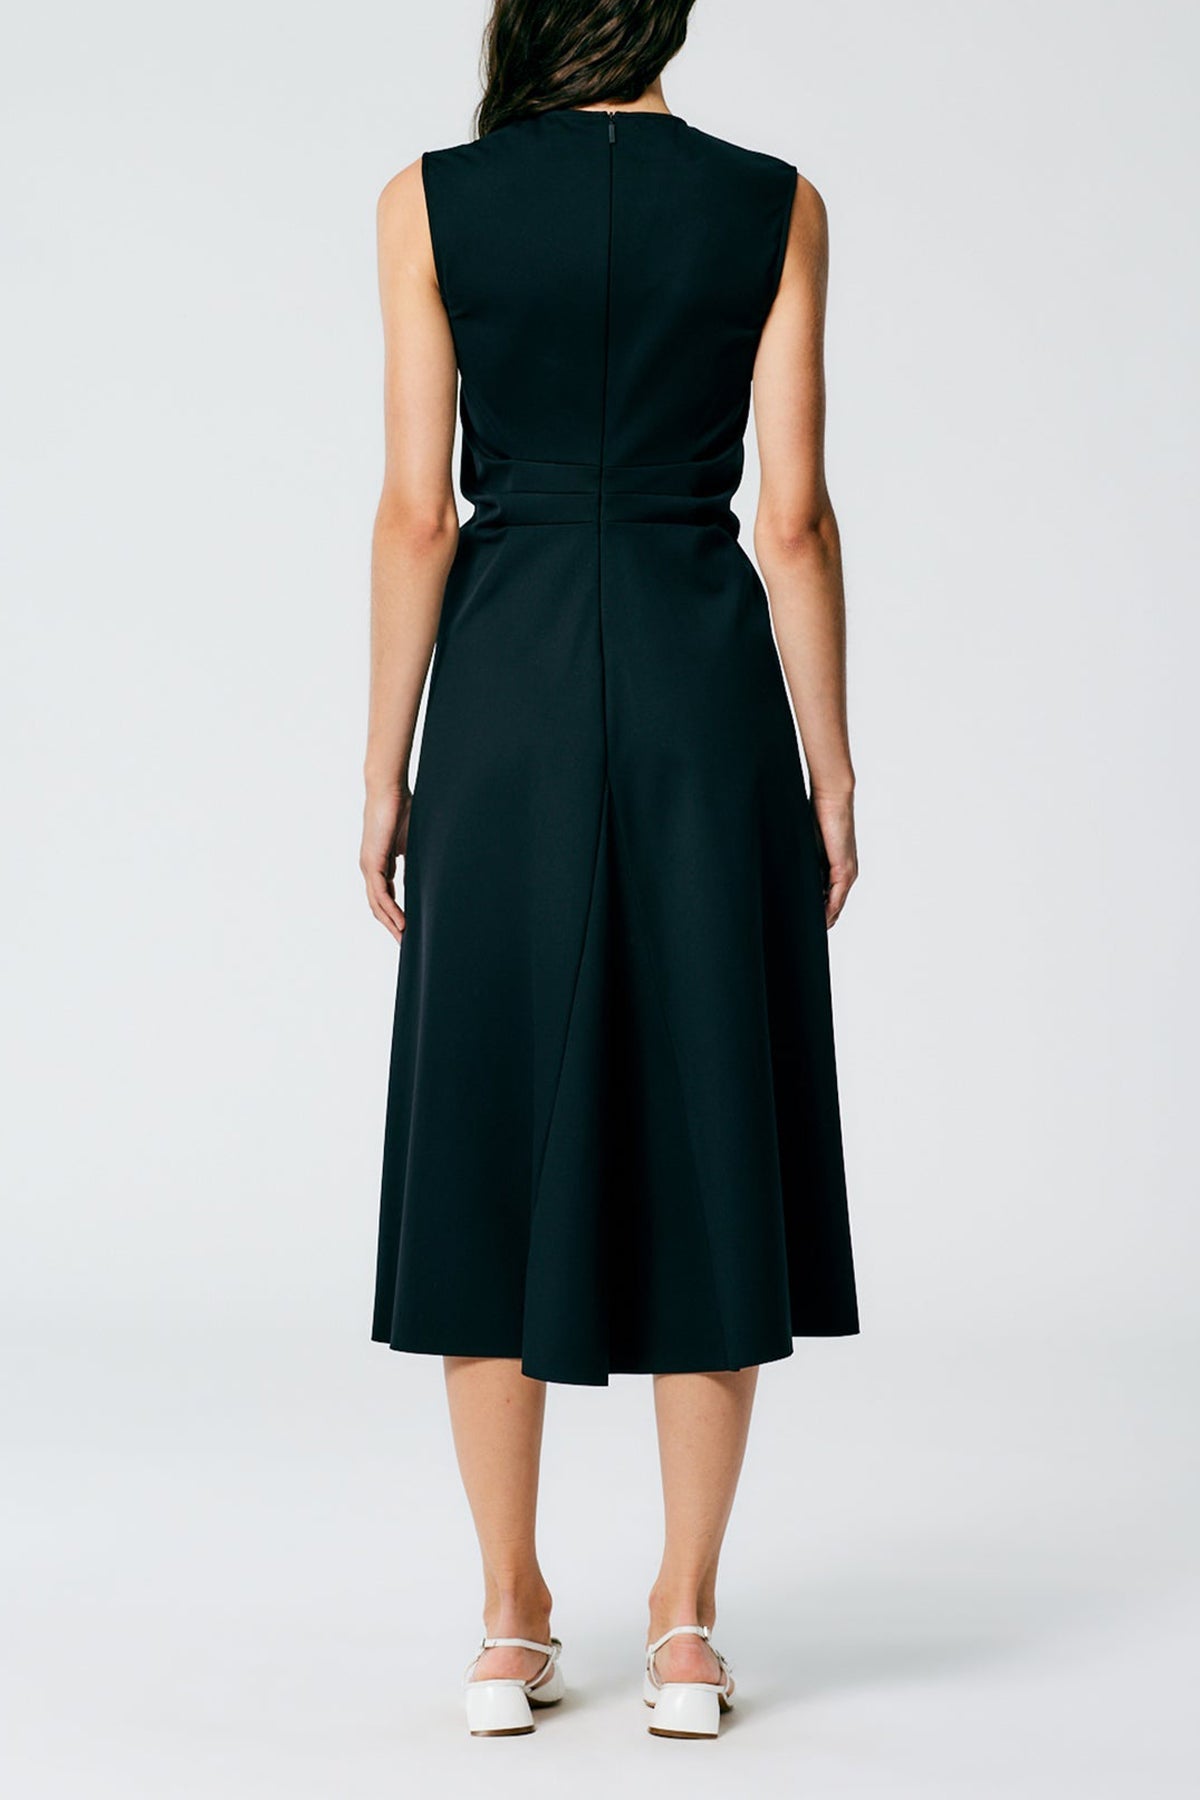 Compact Ultra Stretch Knit V-Neck Godet Dress in Black - shop-olivia.com